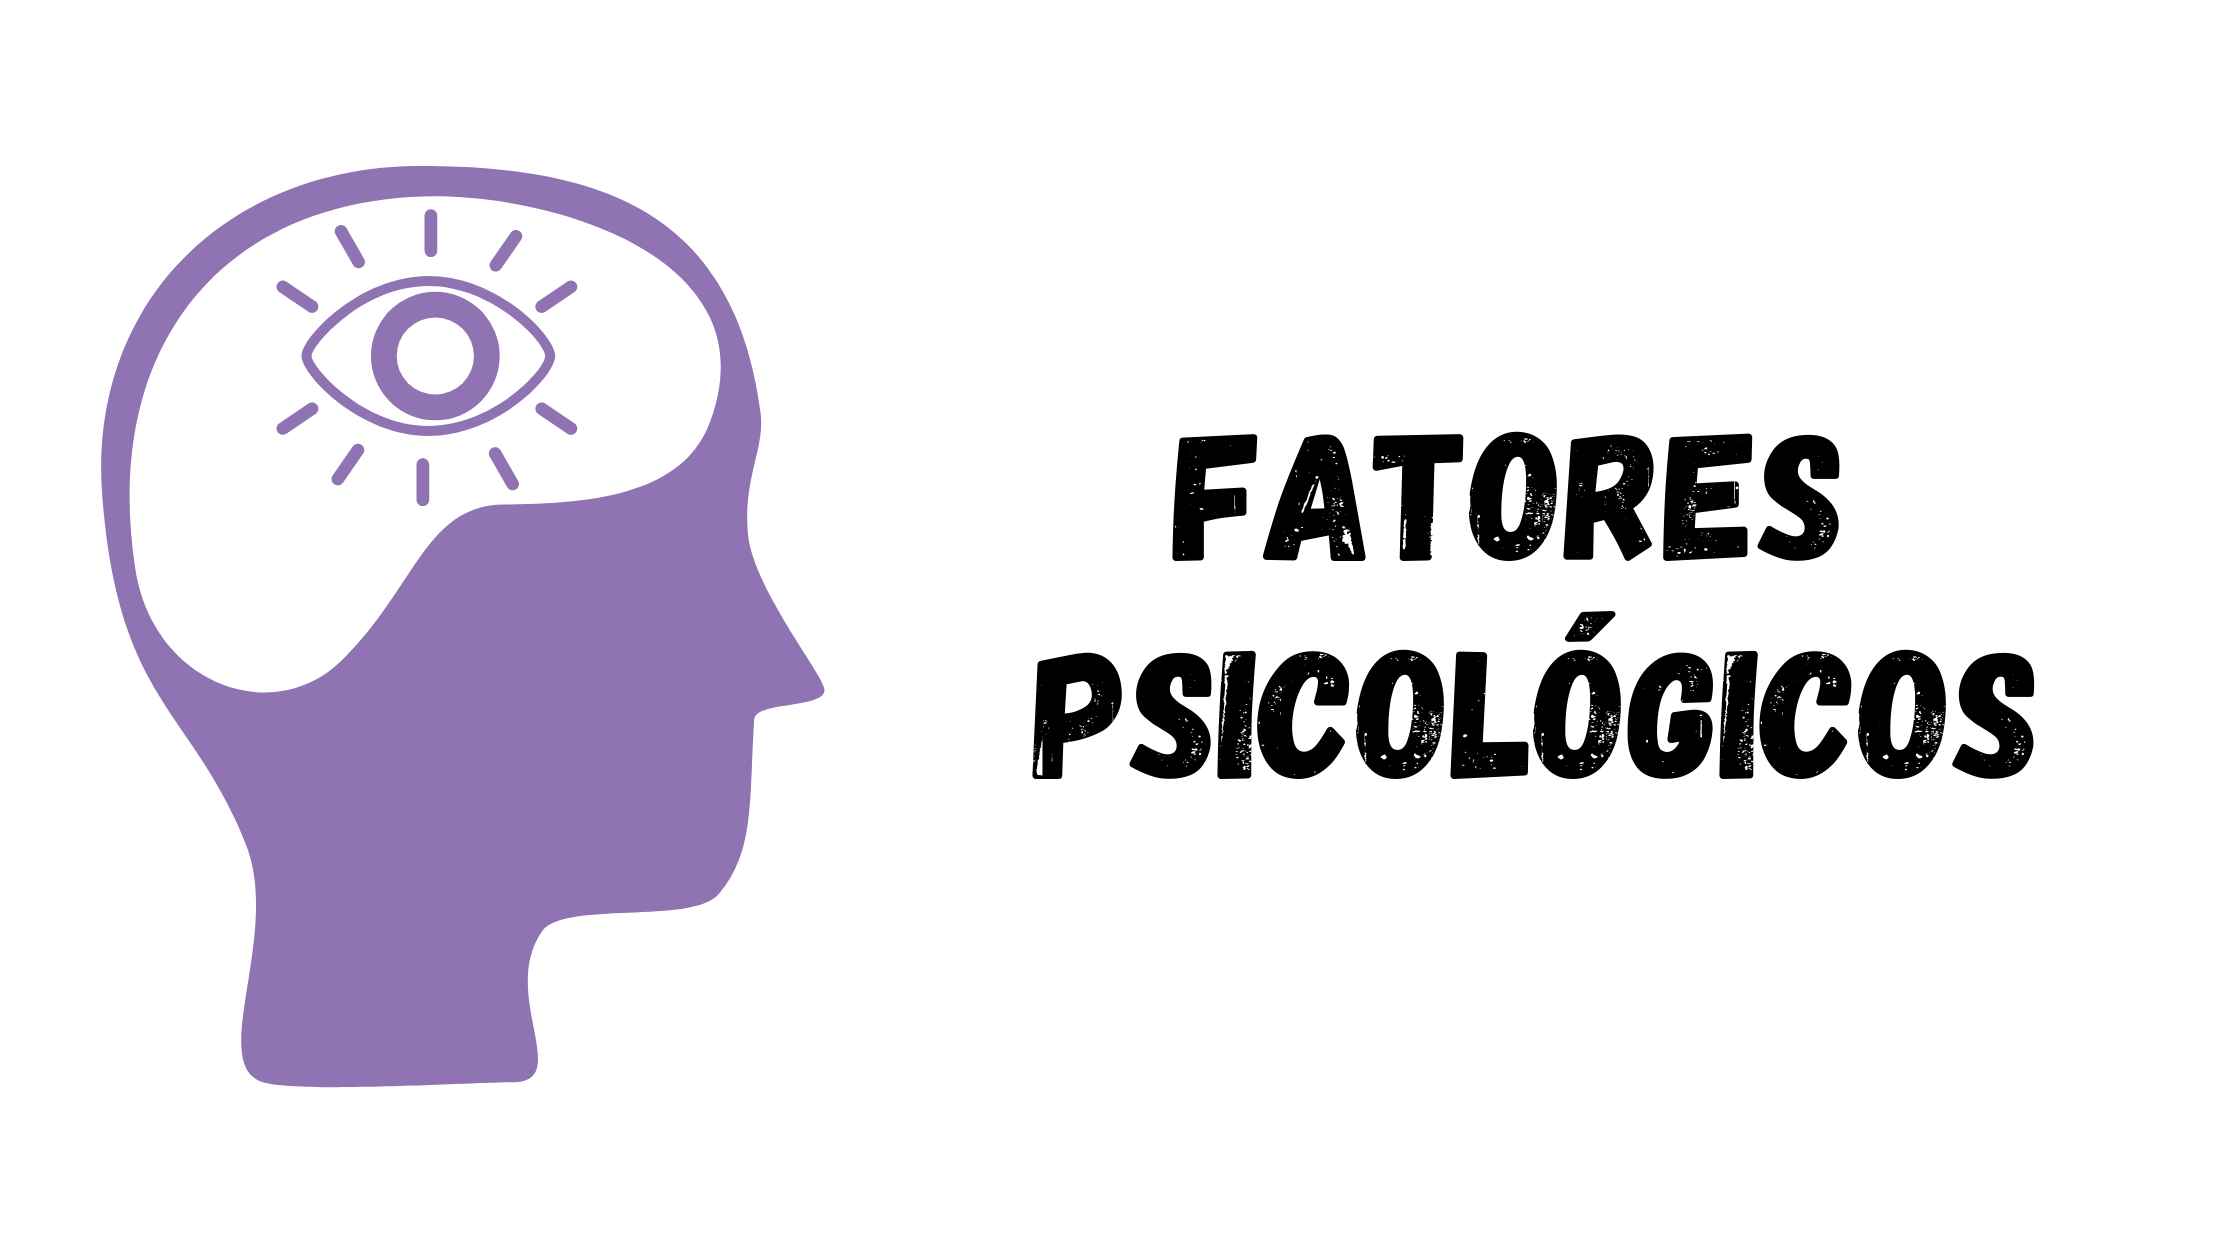 fatores psicologicos